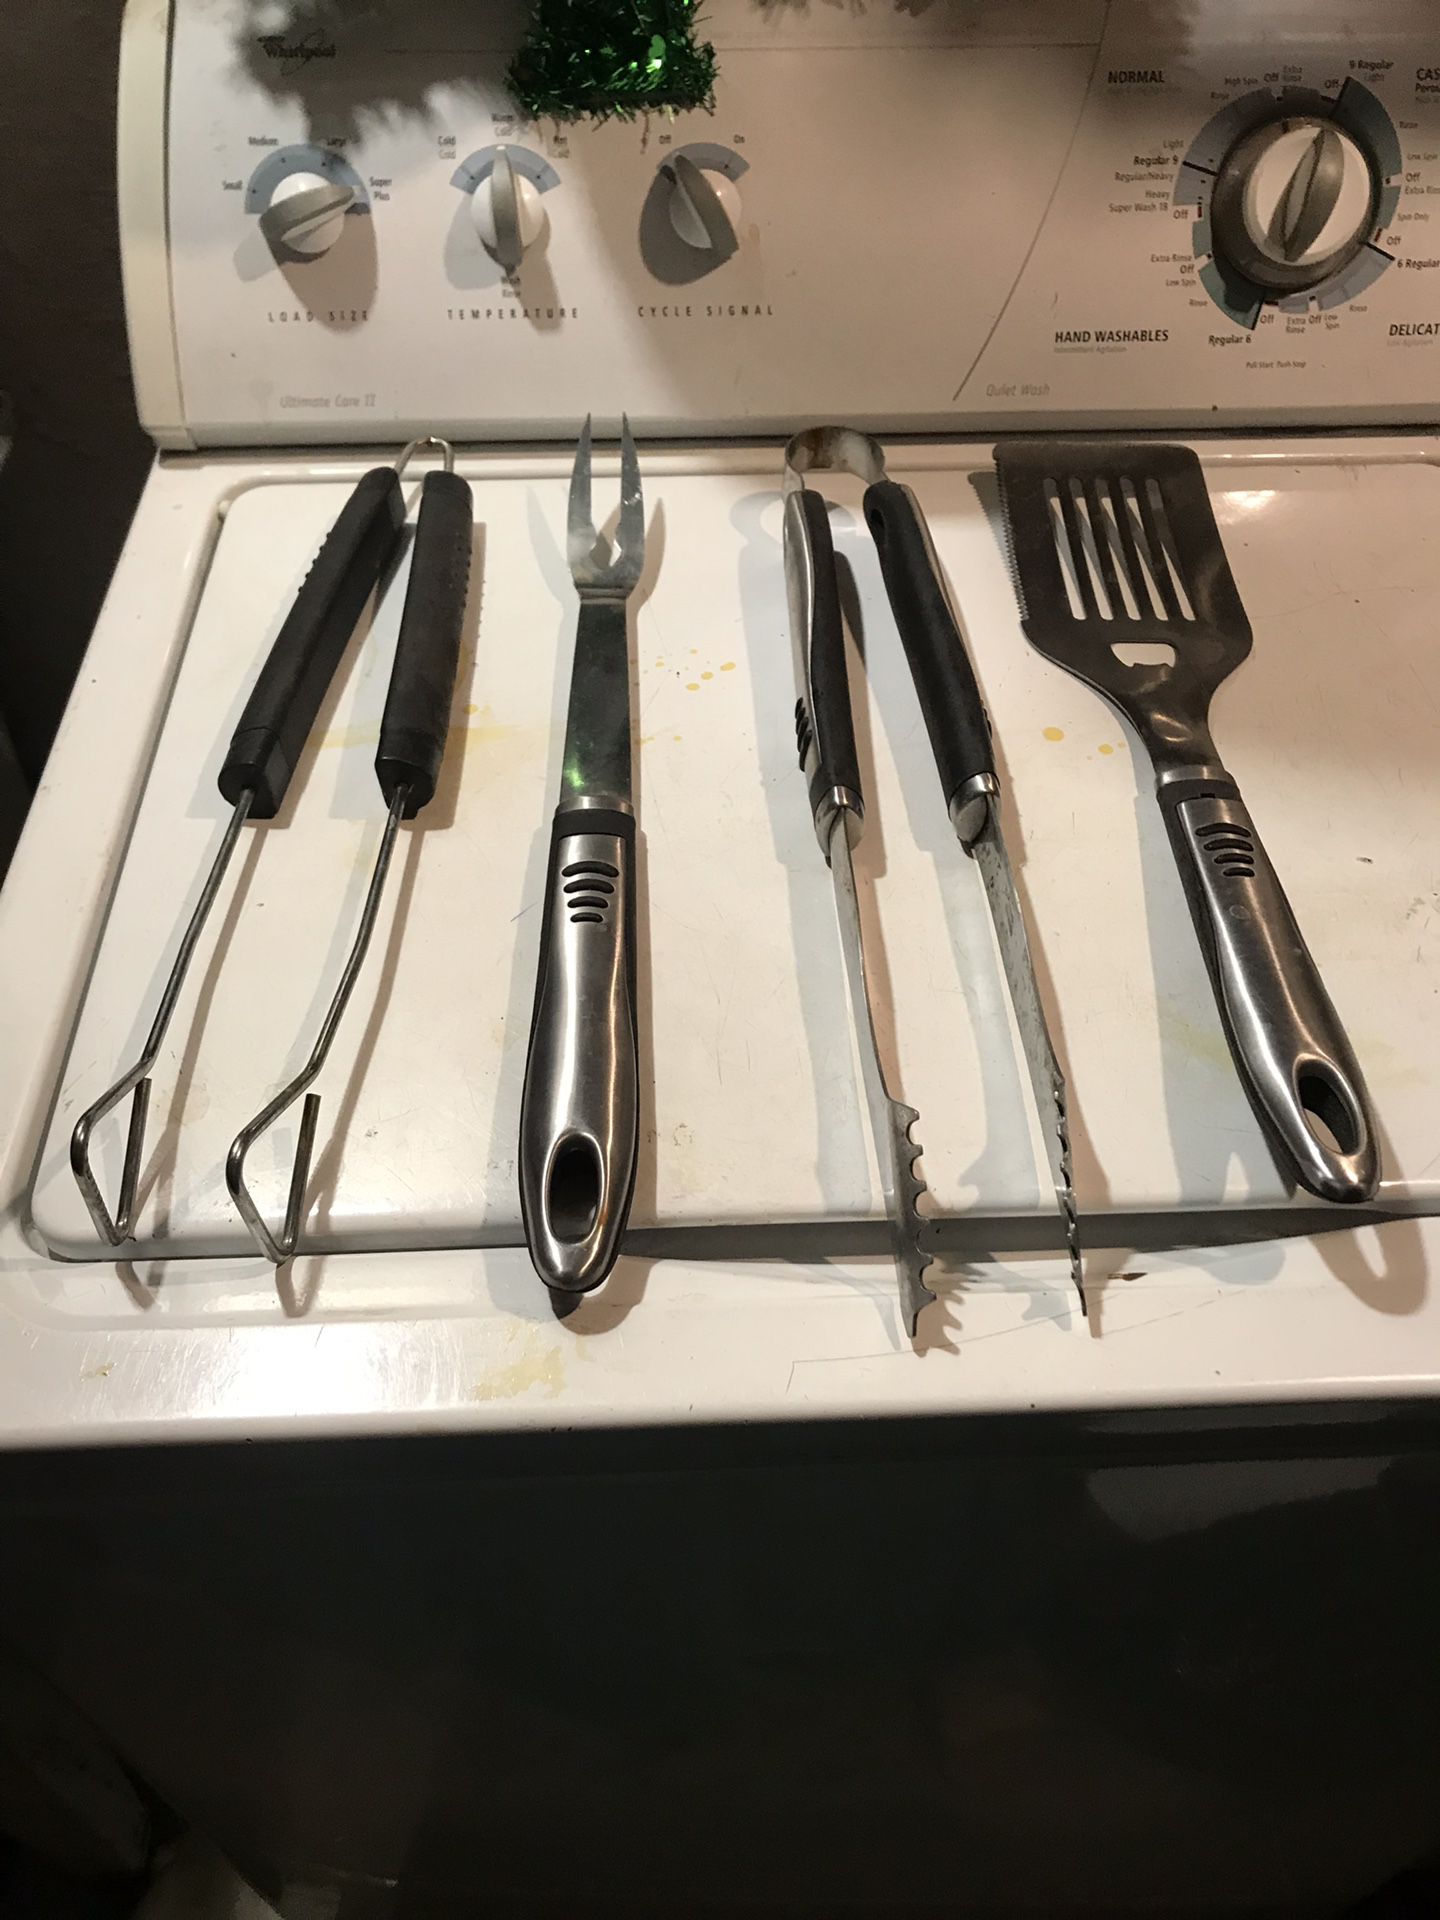 BBQ utensils